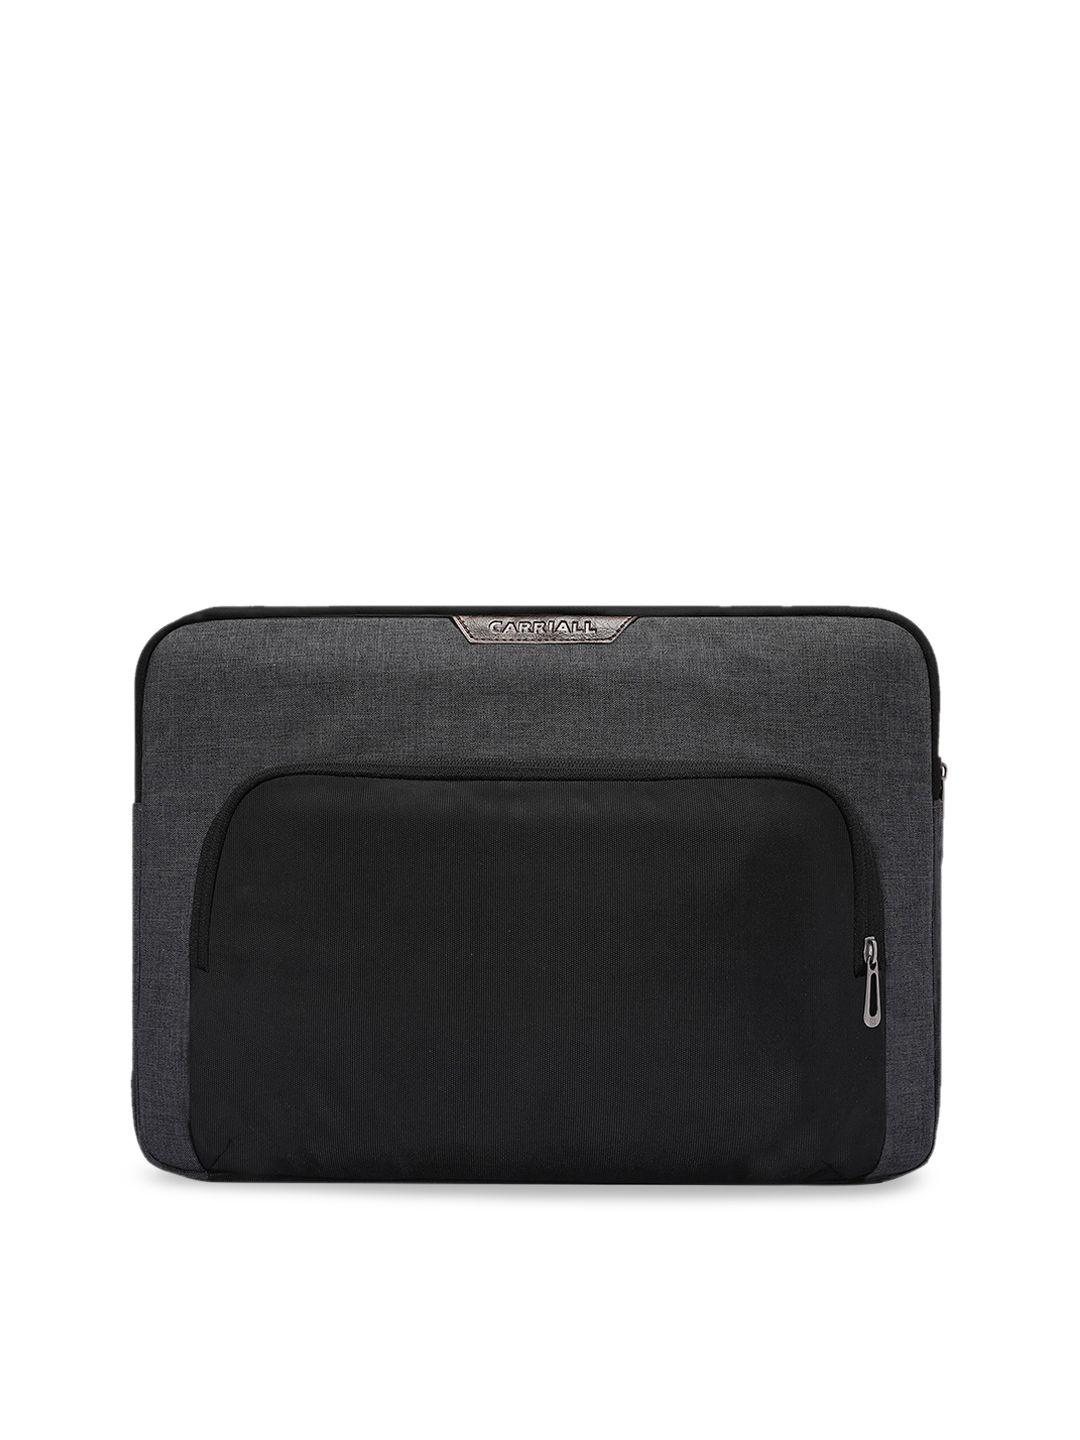 carriall unisex black & grey colourblocked laptop sleeve